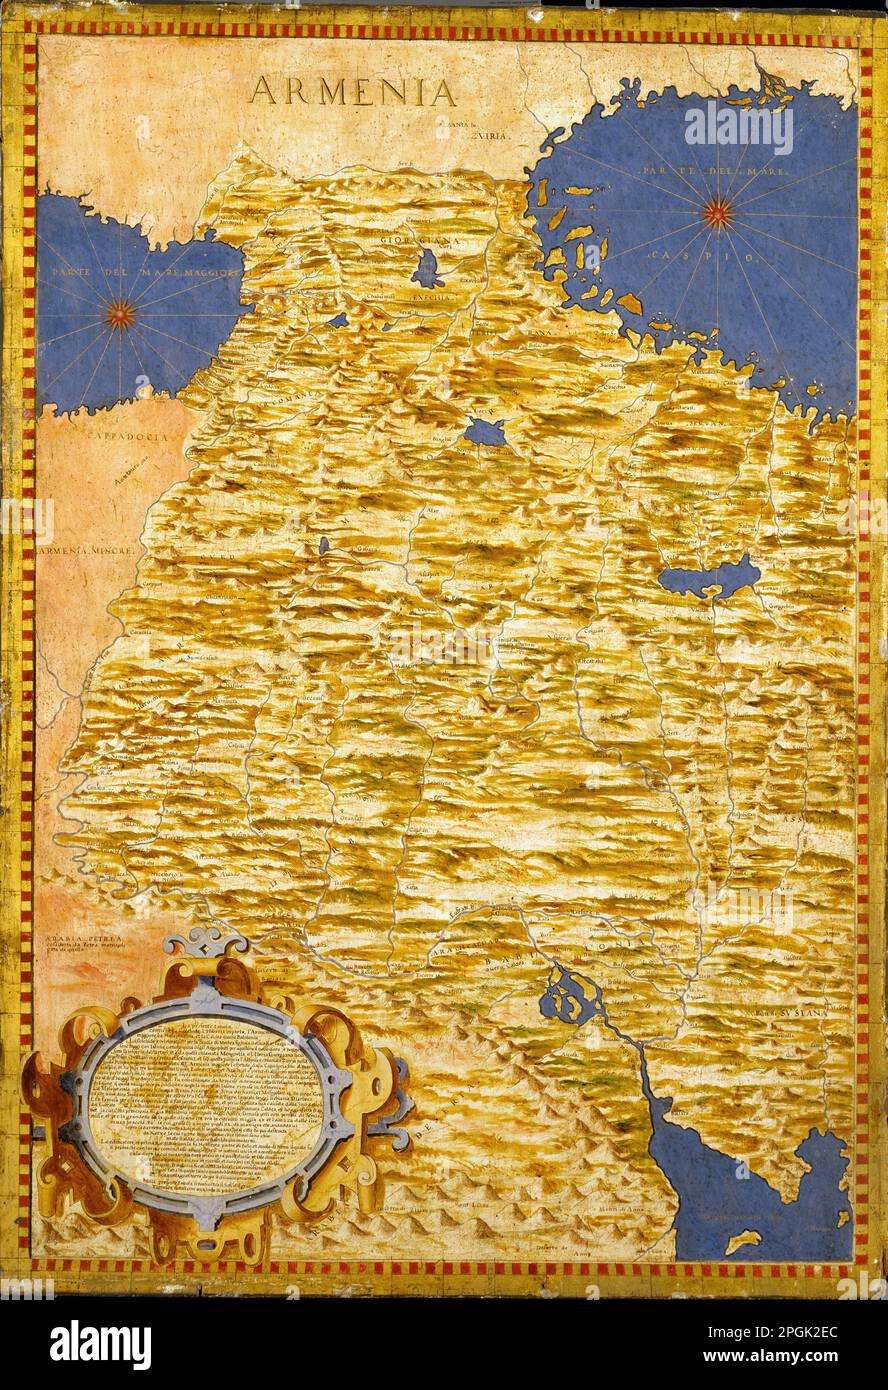 Middle east: Georgia, Armenia, Azerbaijan, Iraq, Western Iran (1565 - 1575) by  Egnazio Danti Stock Photo